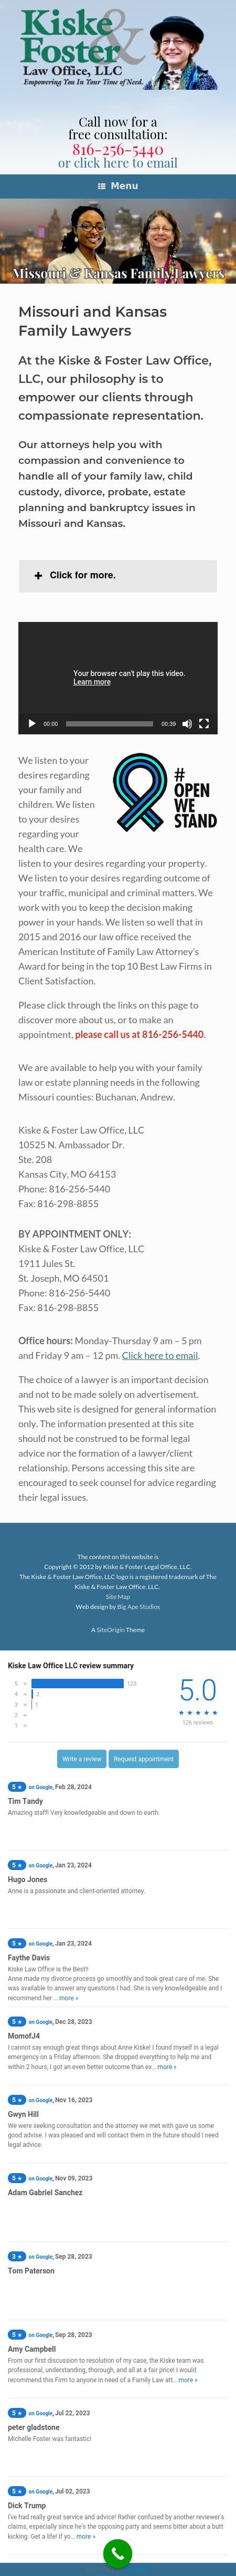 Kiske Law Office, LLC - Kansas City MO Lawyers